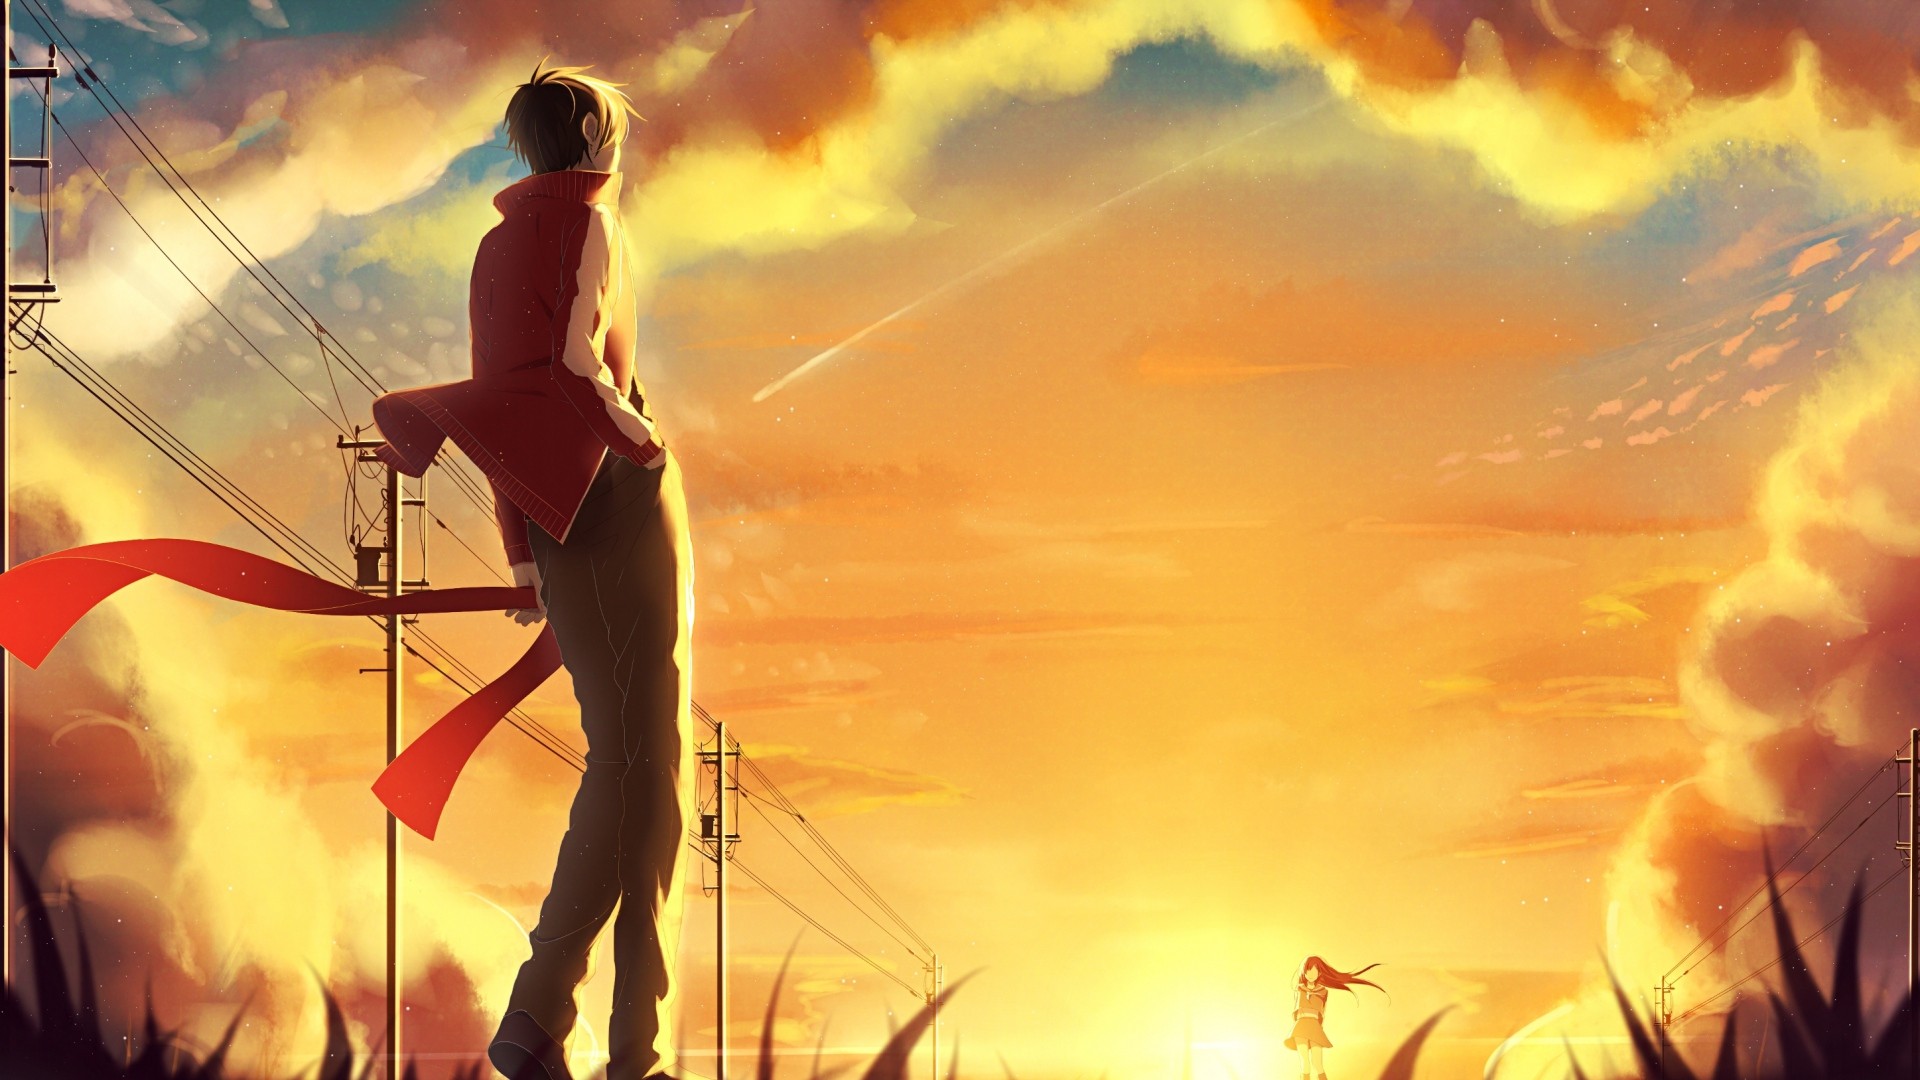 Anime 1920x1080 anime anime girls anime boys outdoors power lines sunlight orange sky sky